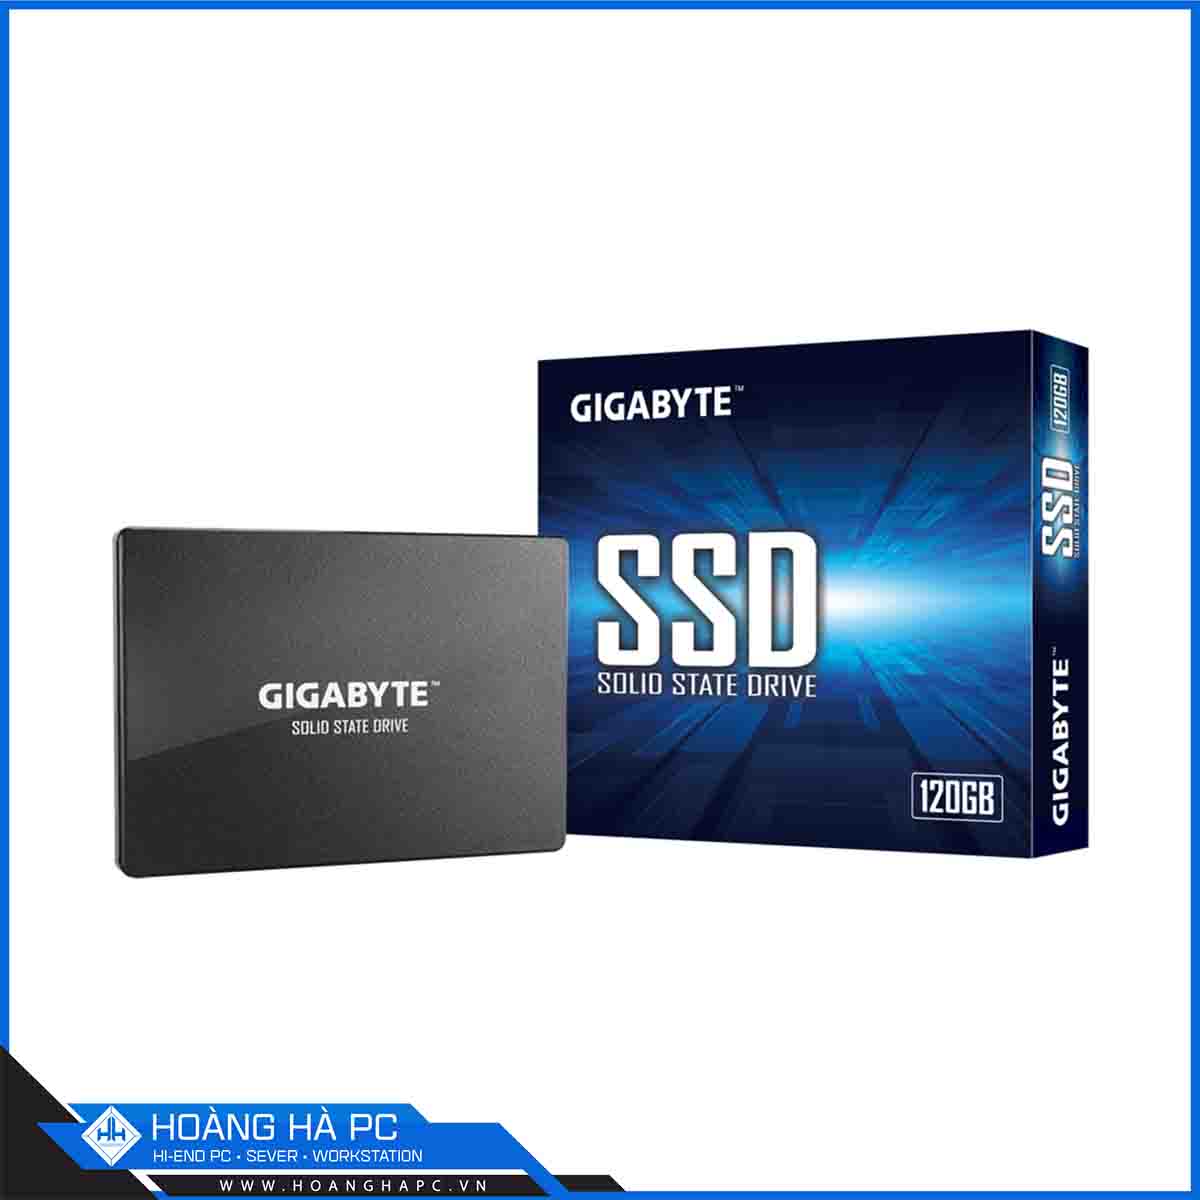 GIGABYTE SSD 120G SATA III